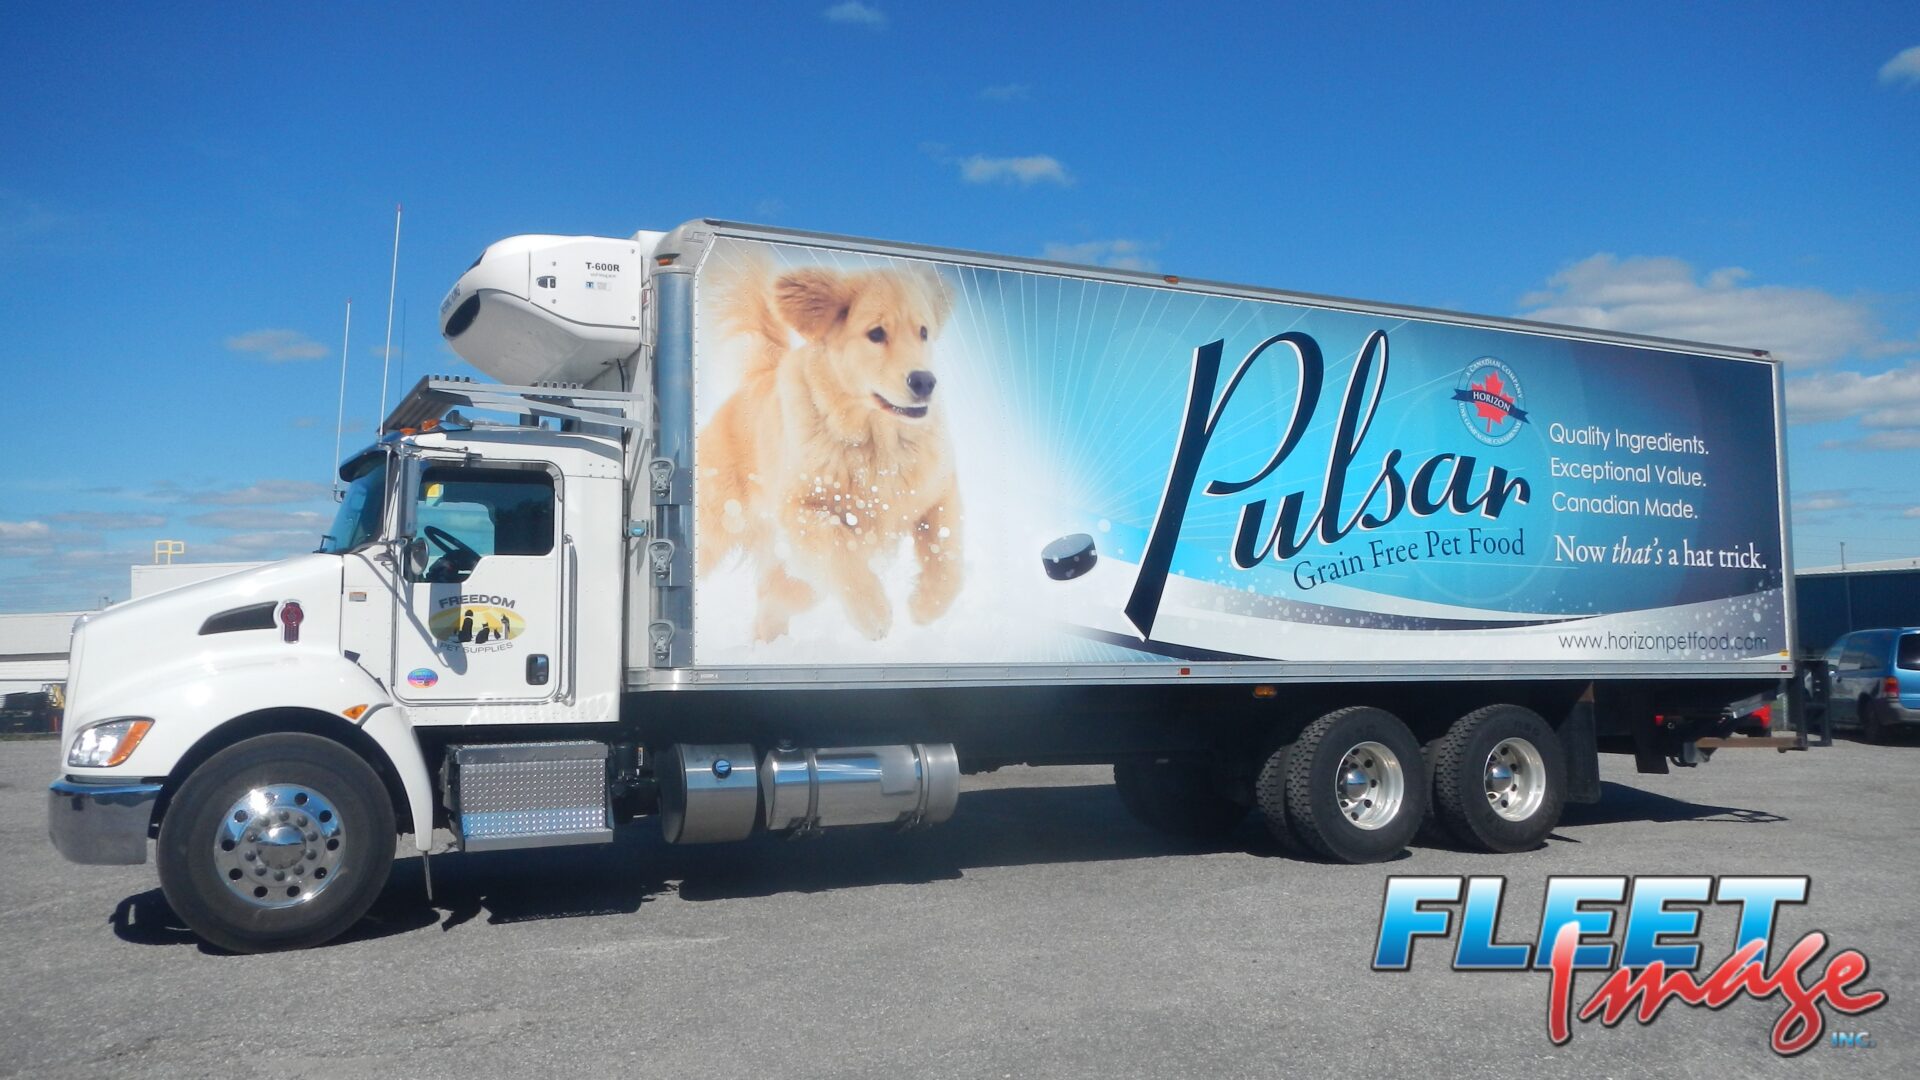 Pulsar Grain Free Pet Food decal sticker on a truck